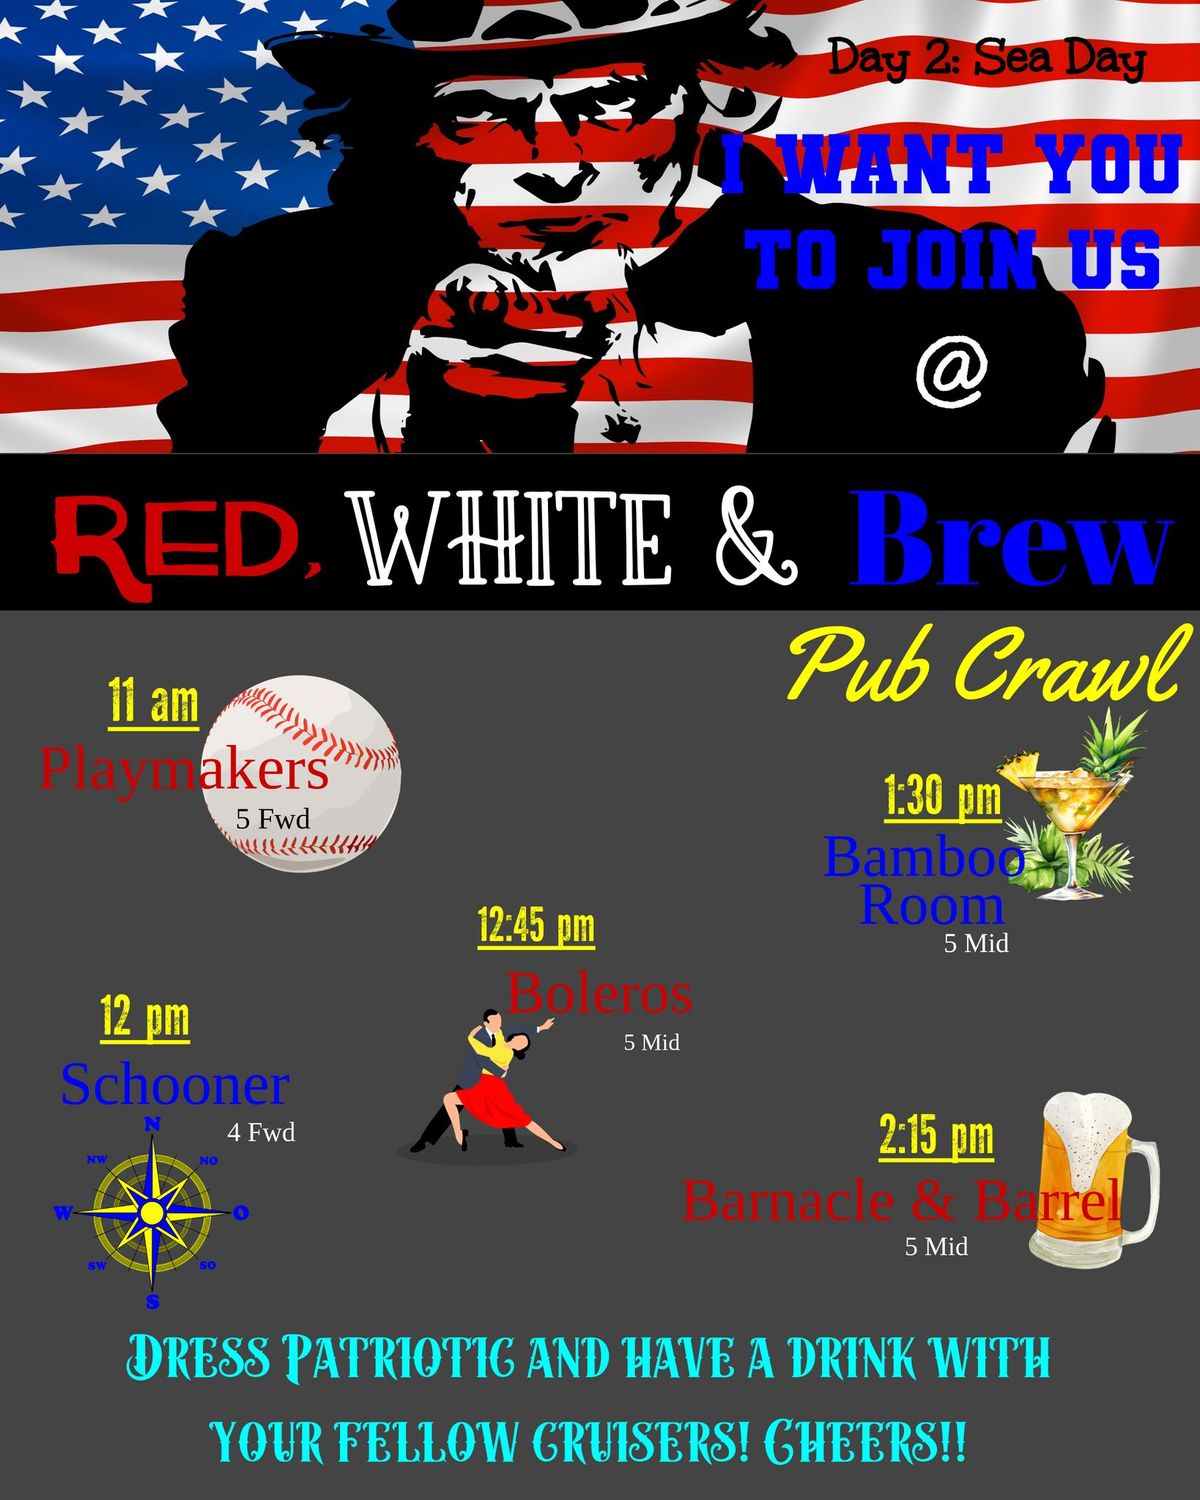 Red, White & Brew Pub Crawl